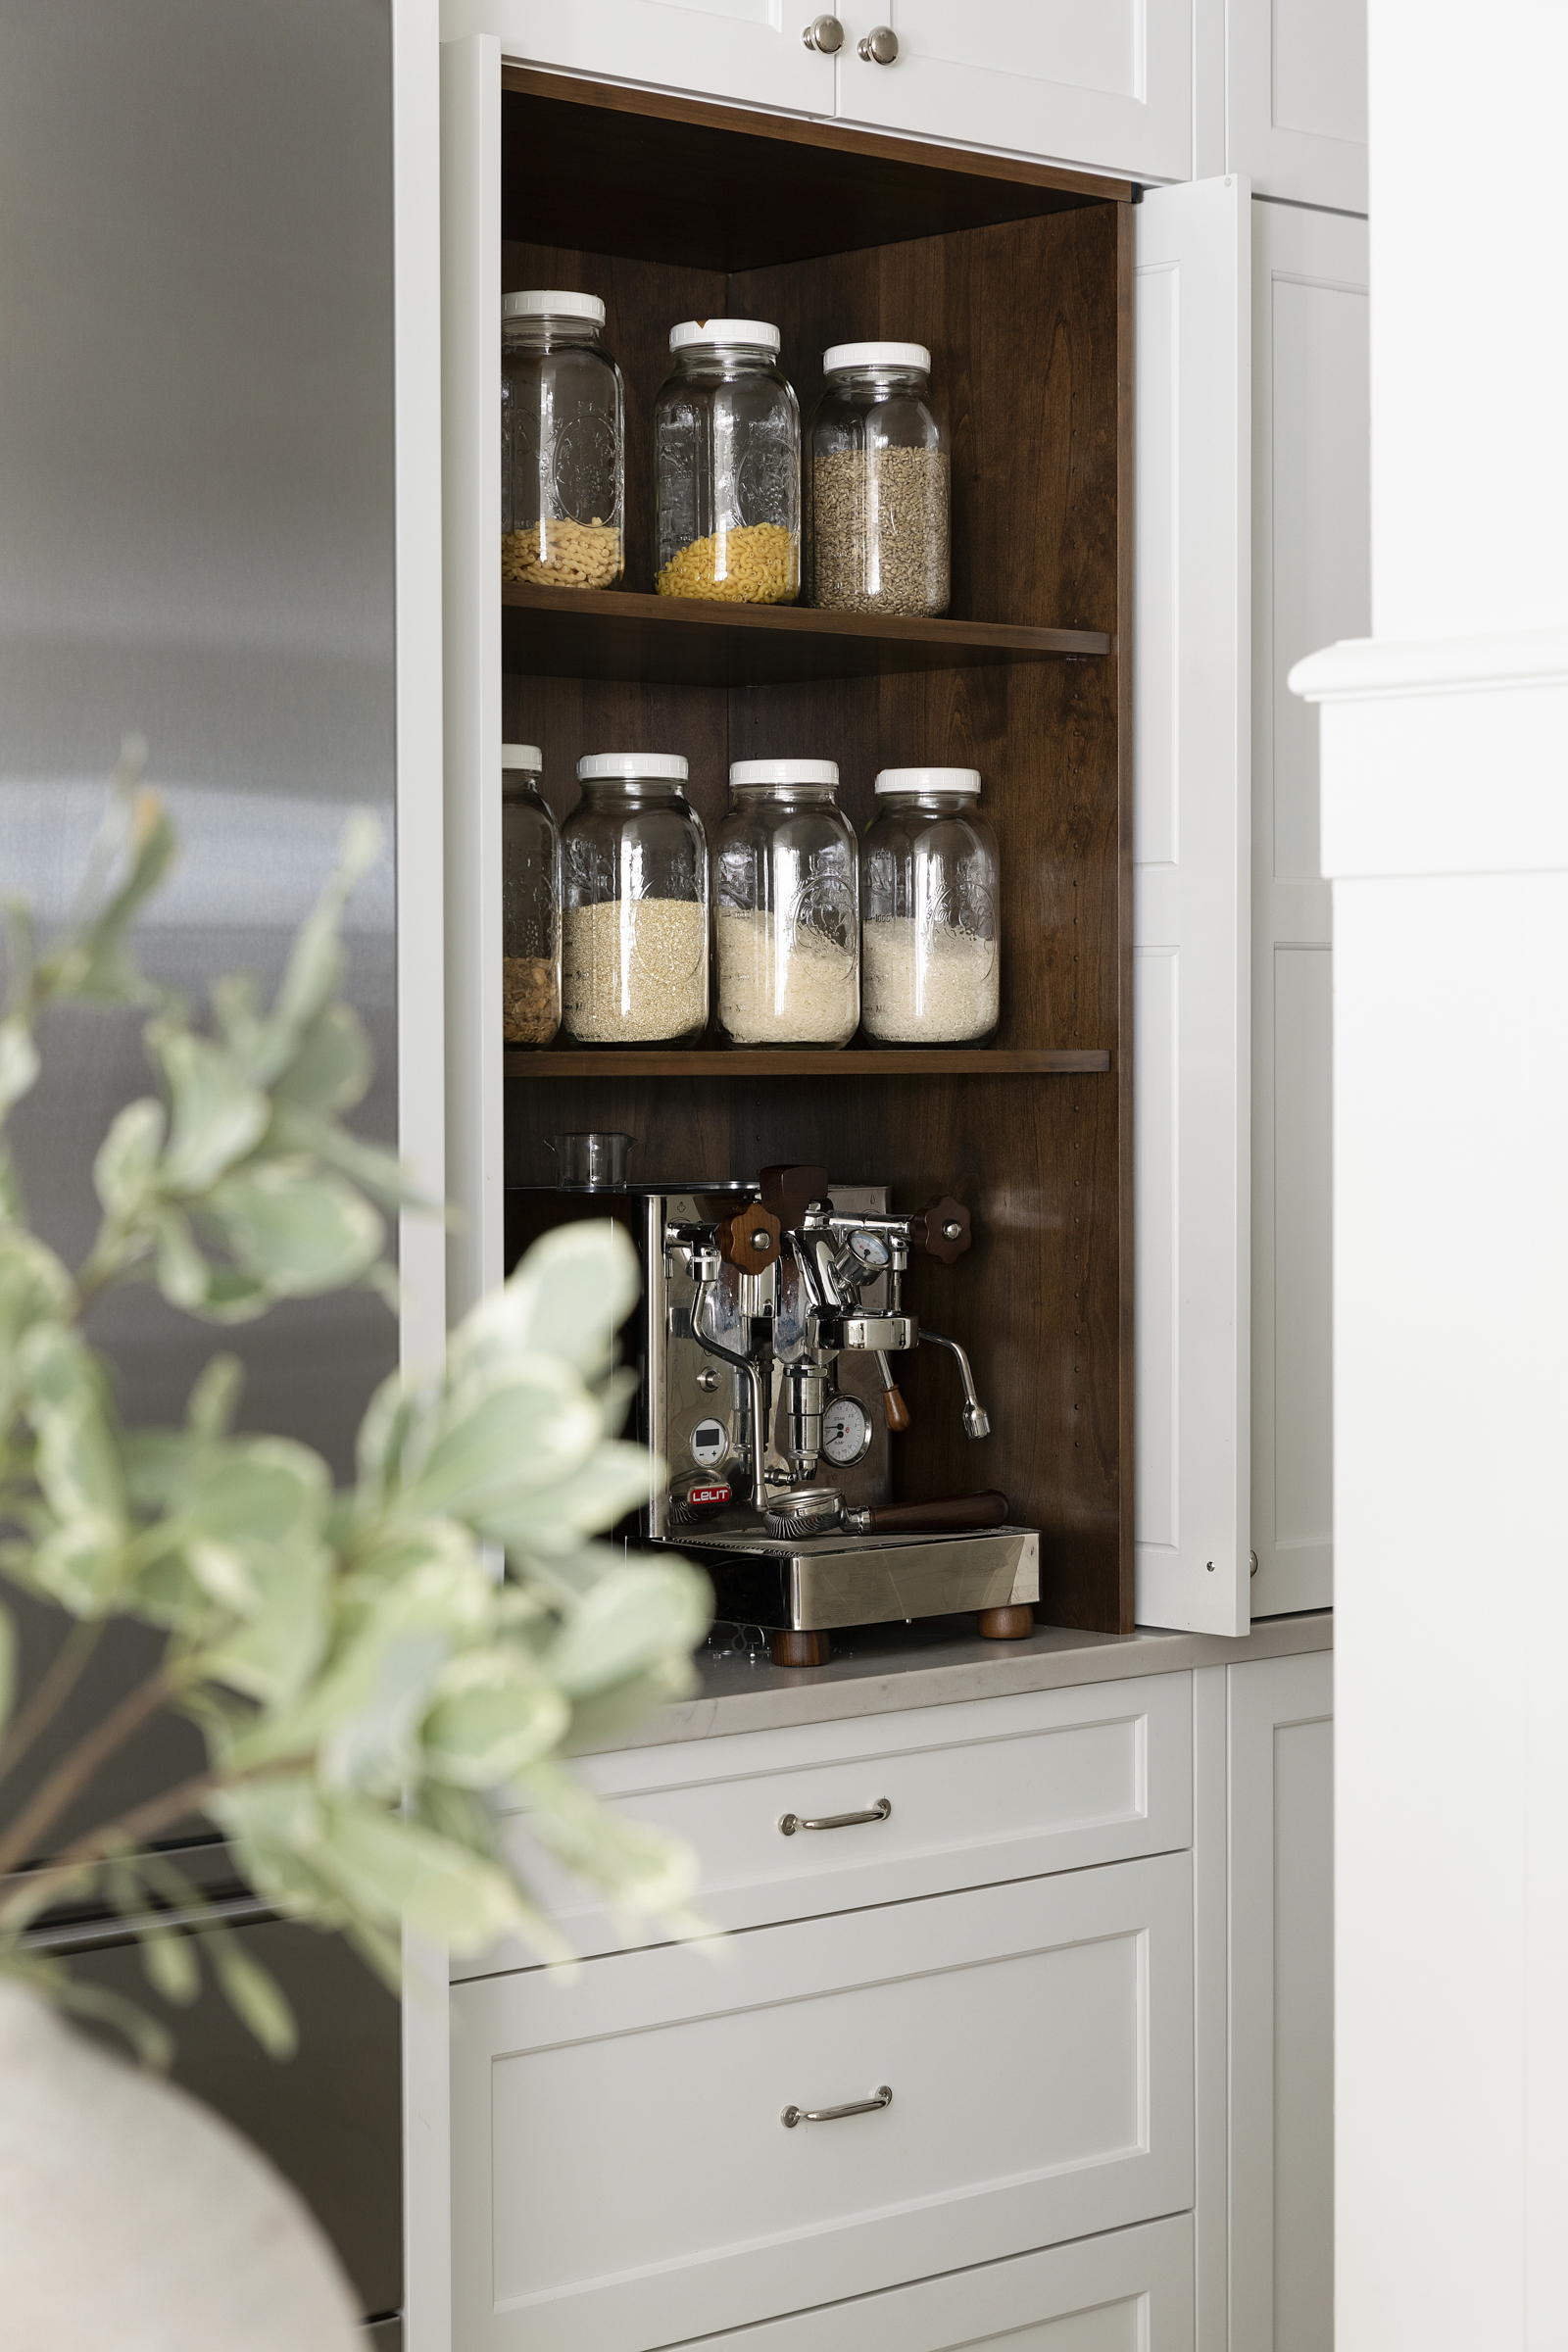 Twin Cities kitchen renovation with dark alder interior cabinet and spice jars.